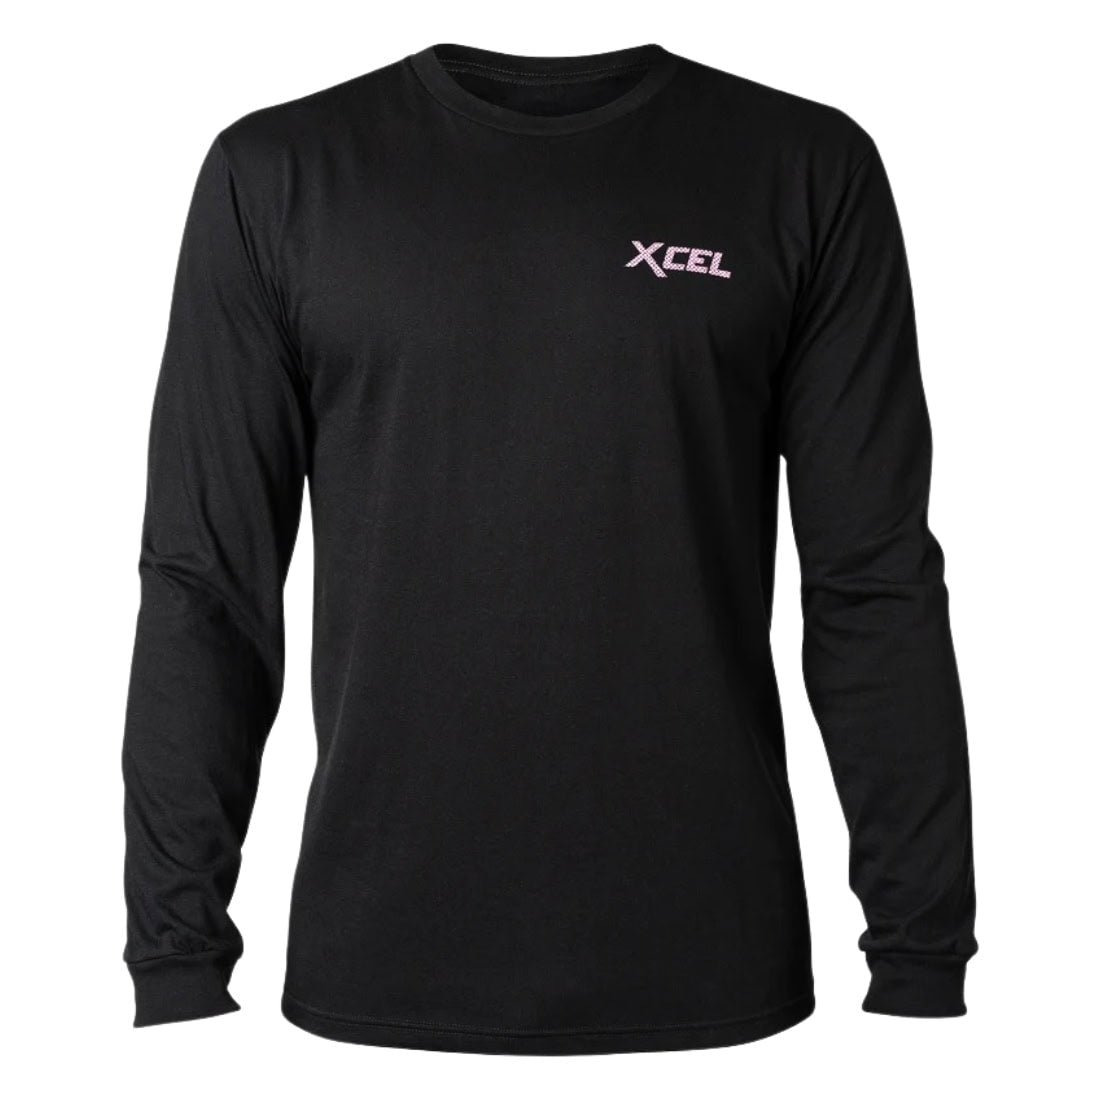 Xcel Throwback Longsleeve T-Shirt - Black - Mens Graphic T-Shirt by Xcel